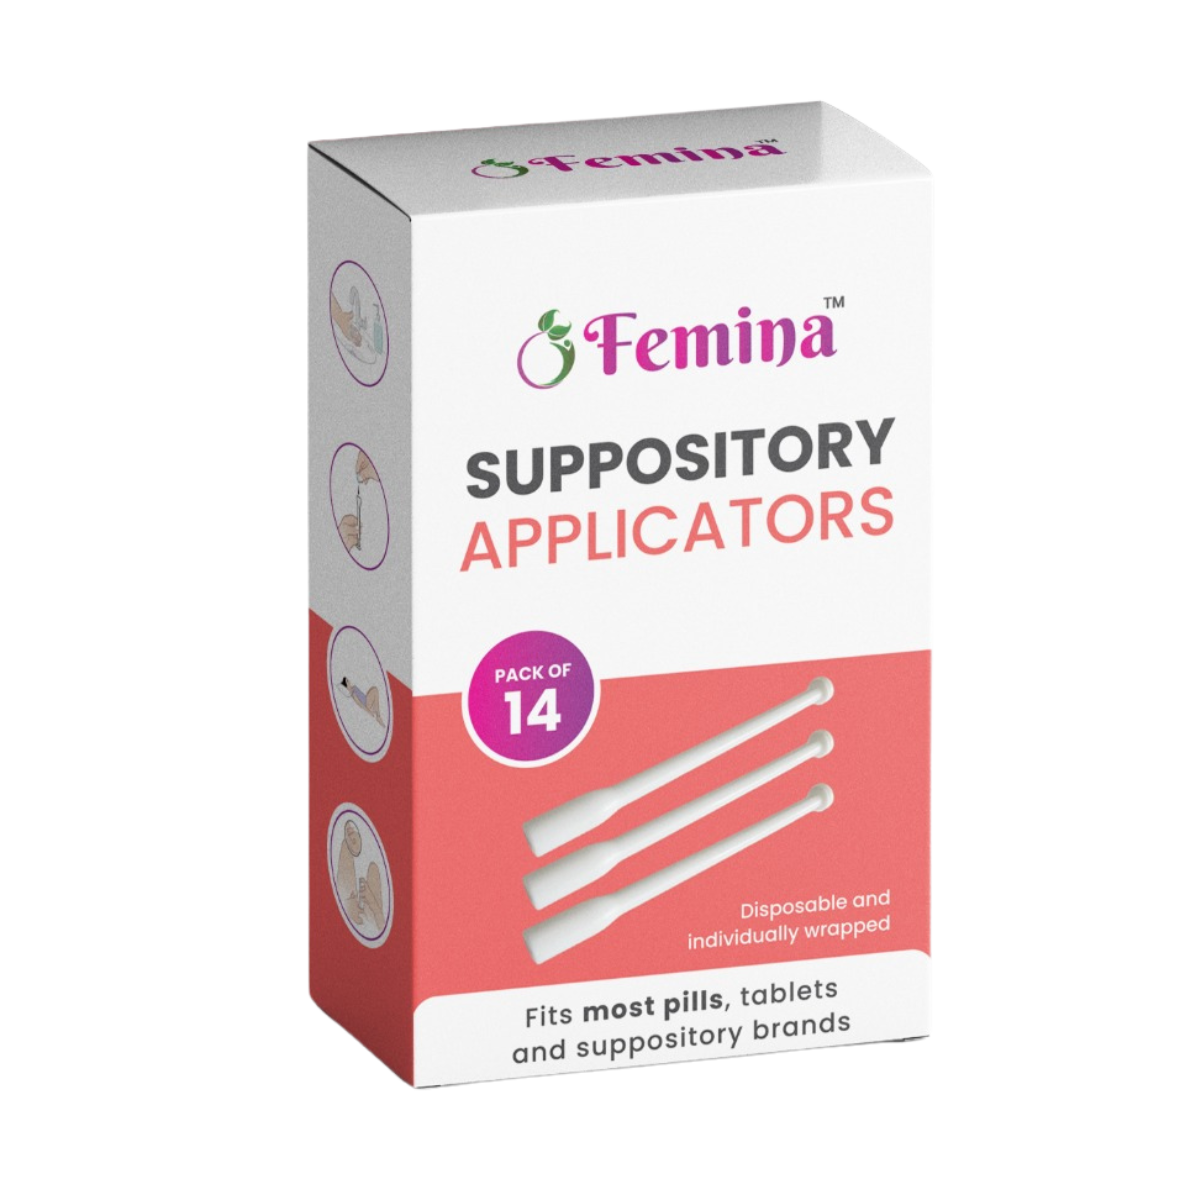 Femina Vaginal Suppository Applicators